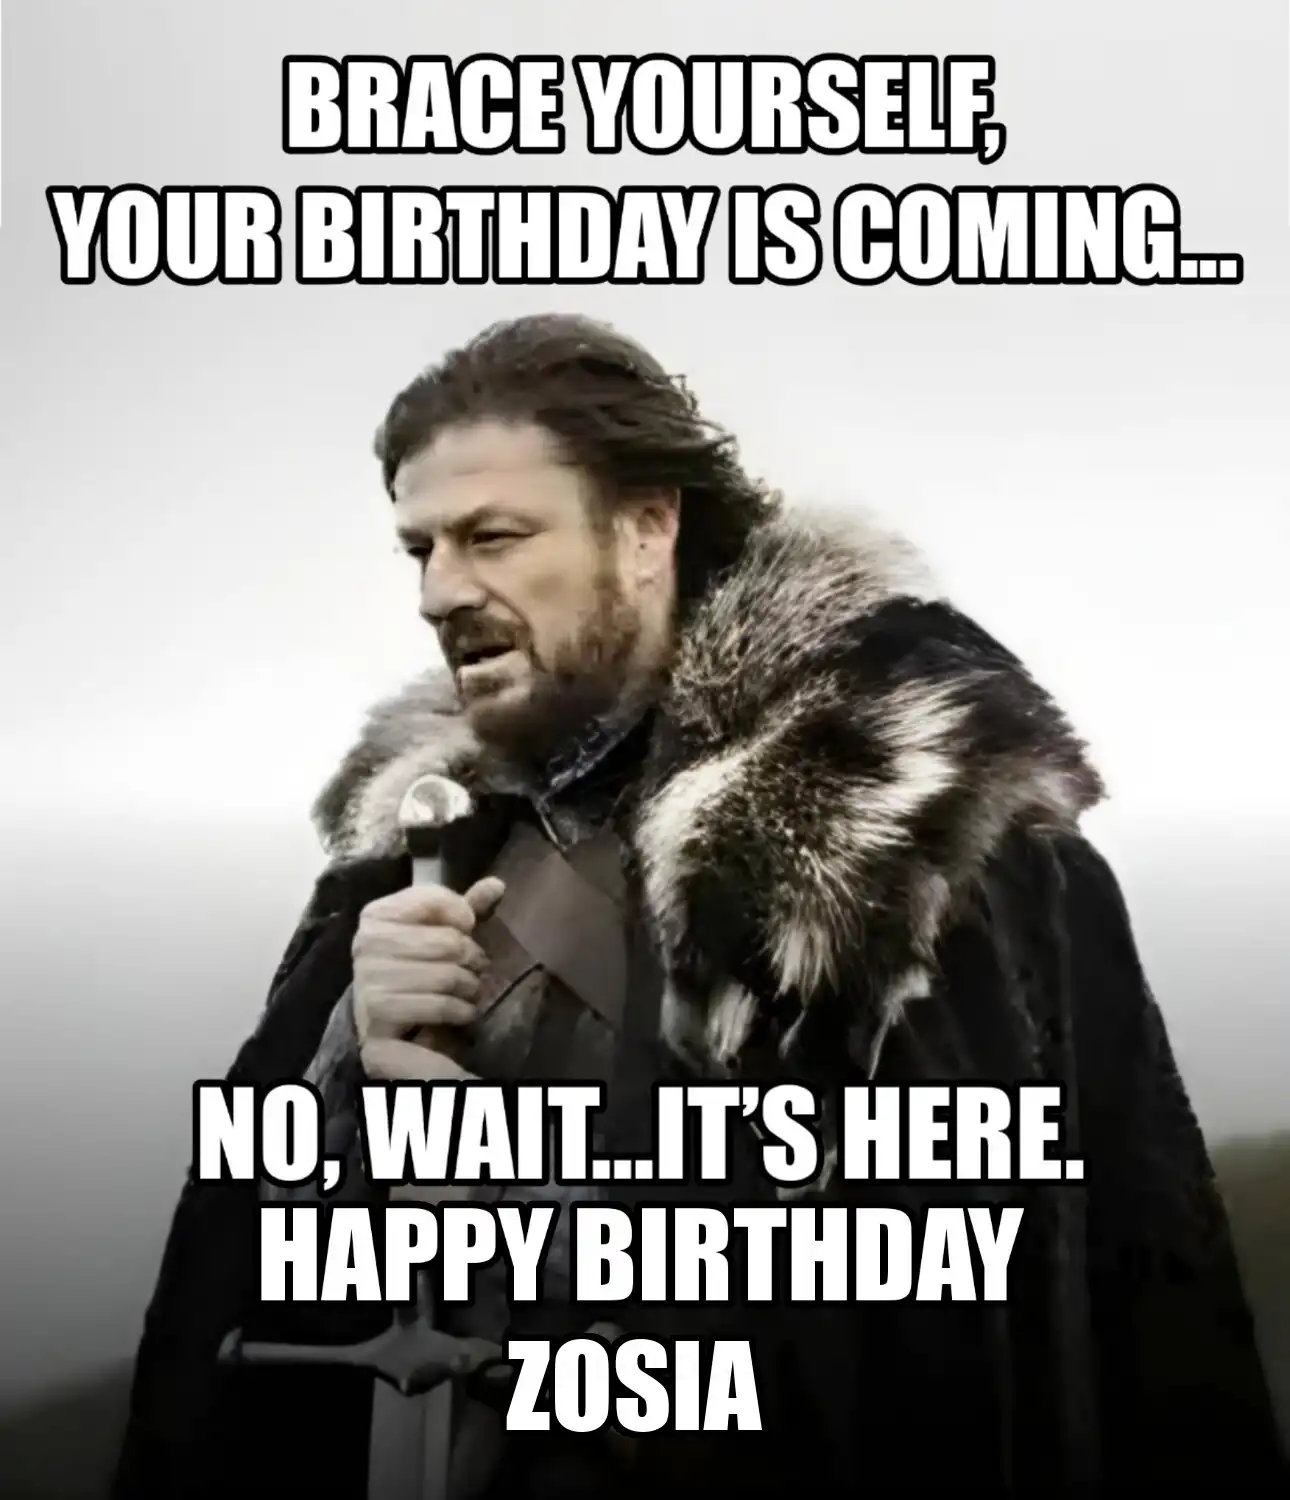 Happy Birthday Zosia Brace Yourself Your Birthday Is Coming Meme